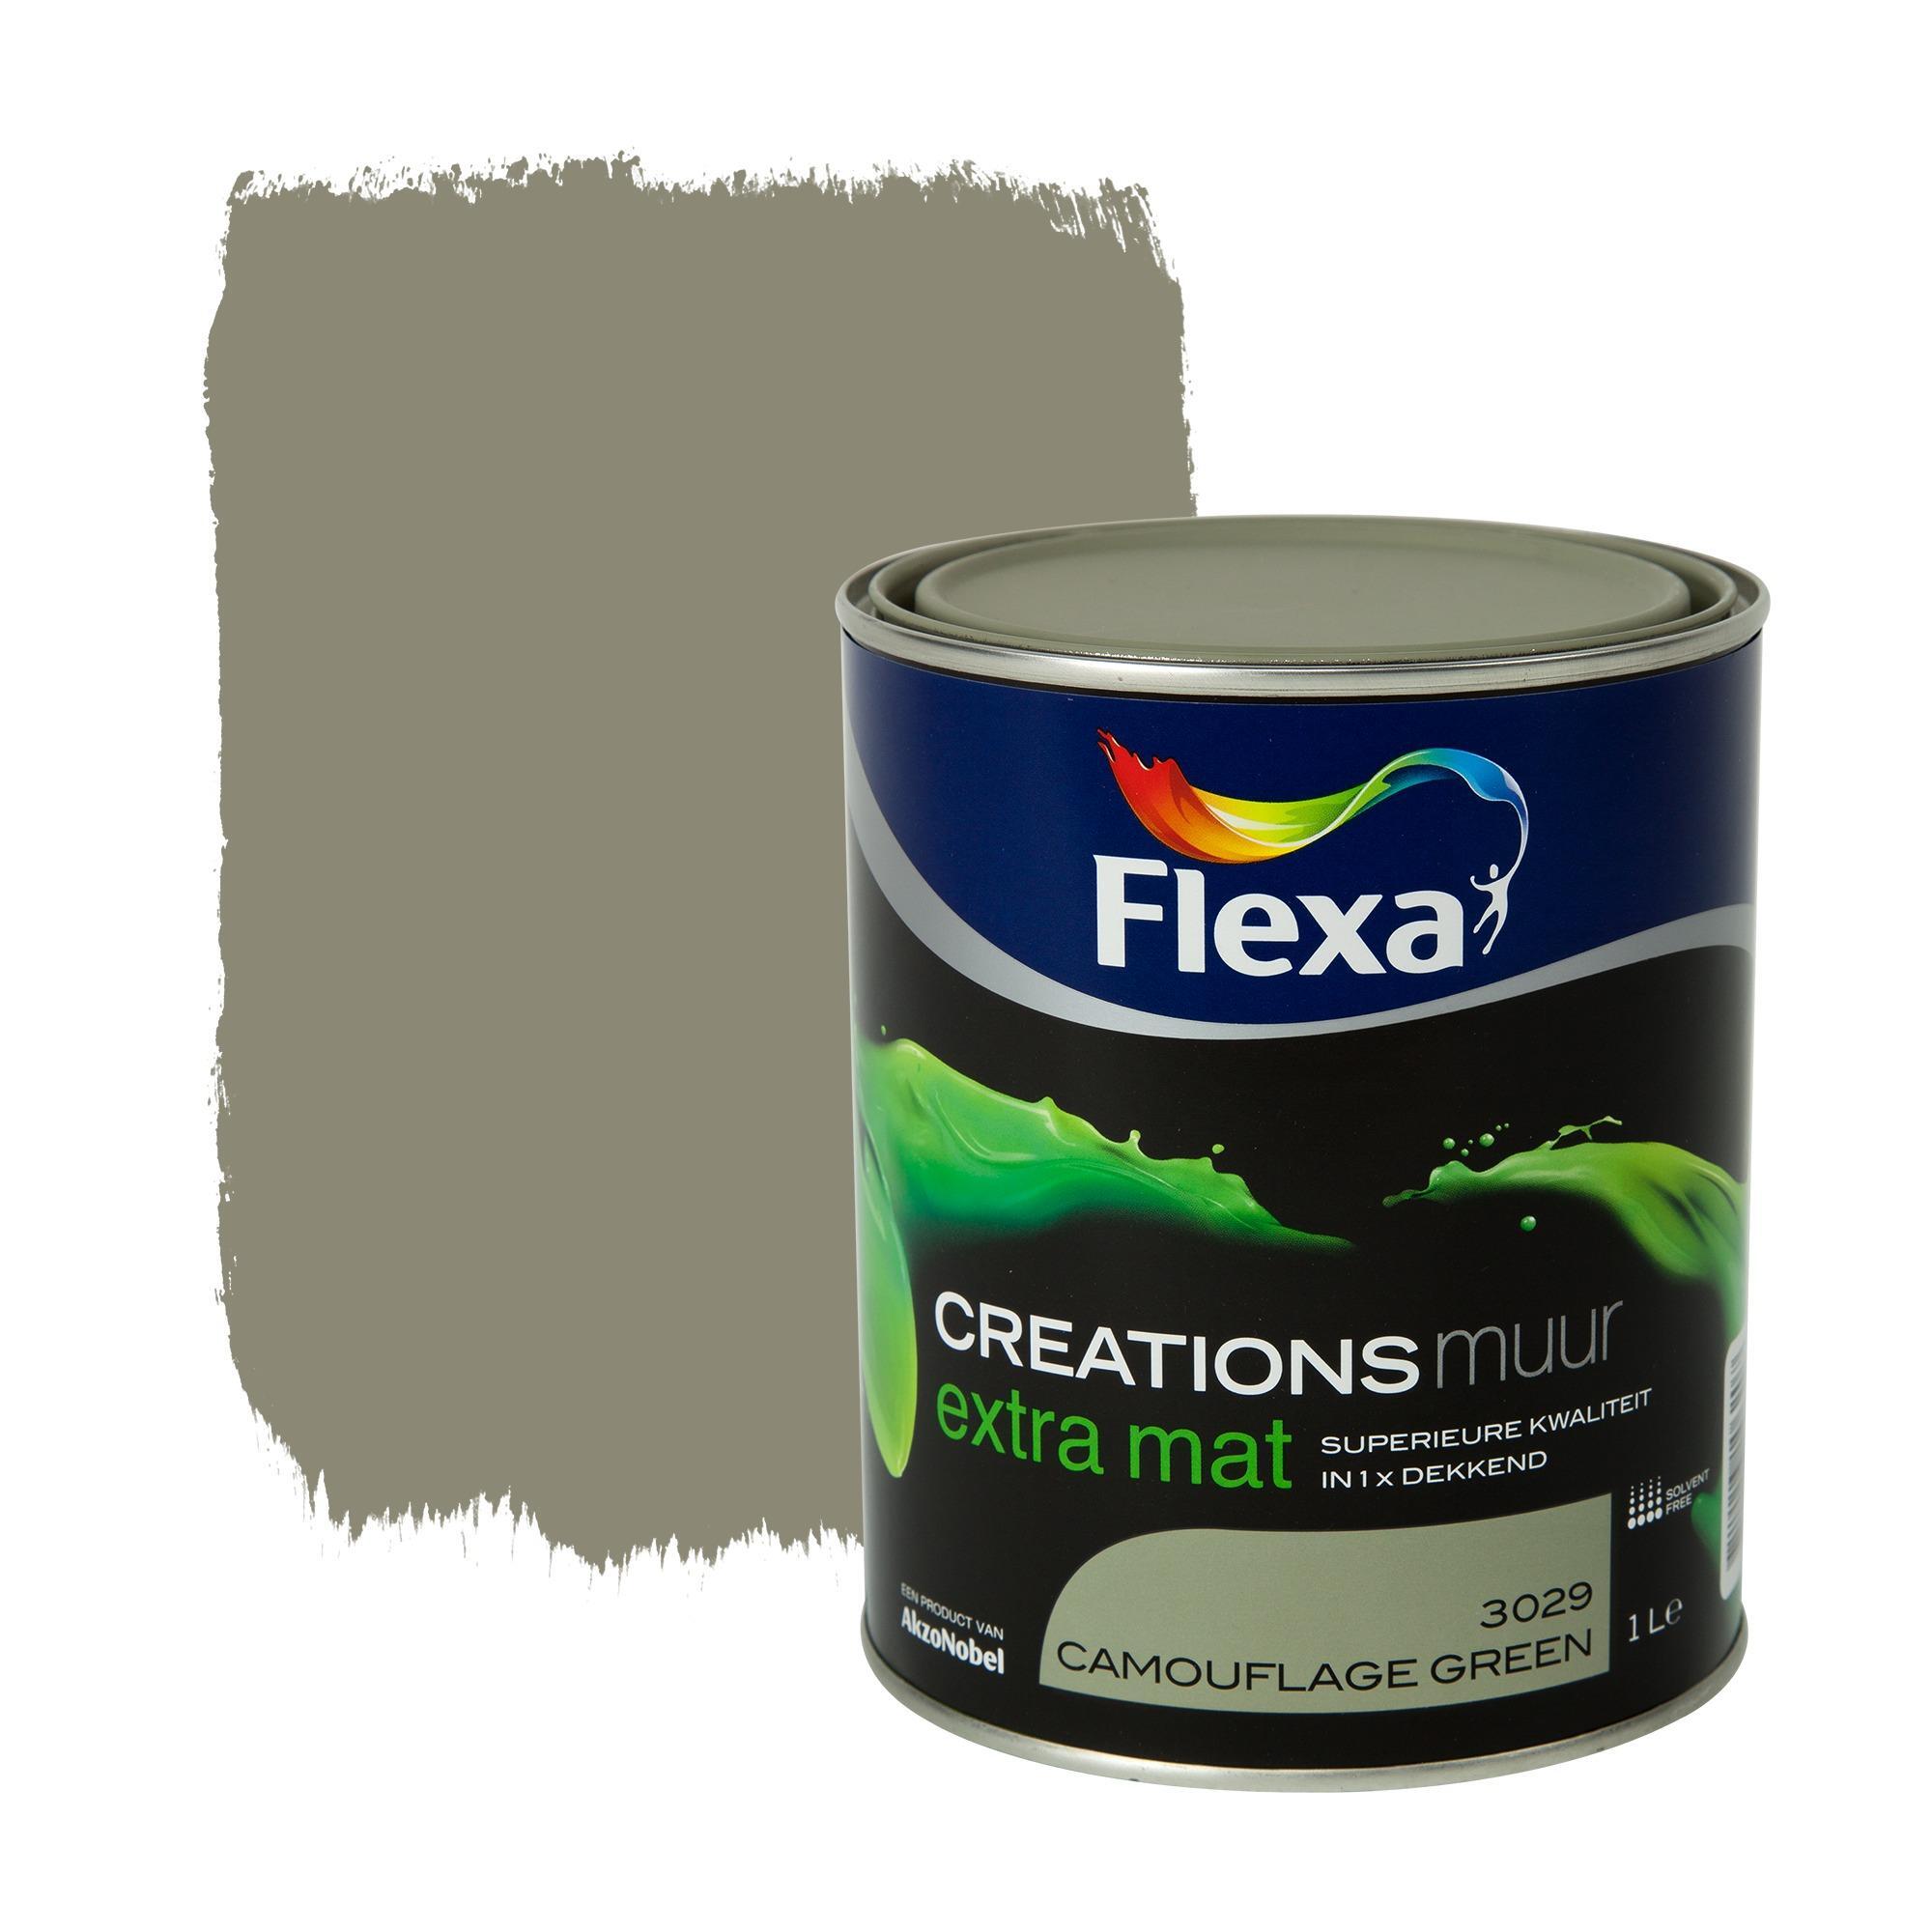 FLEXA Creations muurverf camouflage green extra mat 1 liter